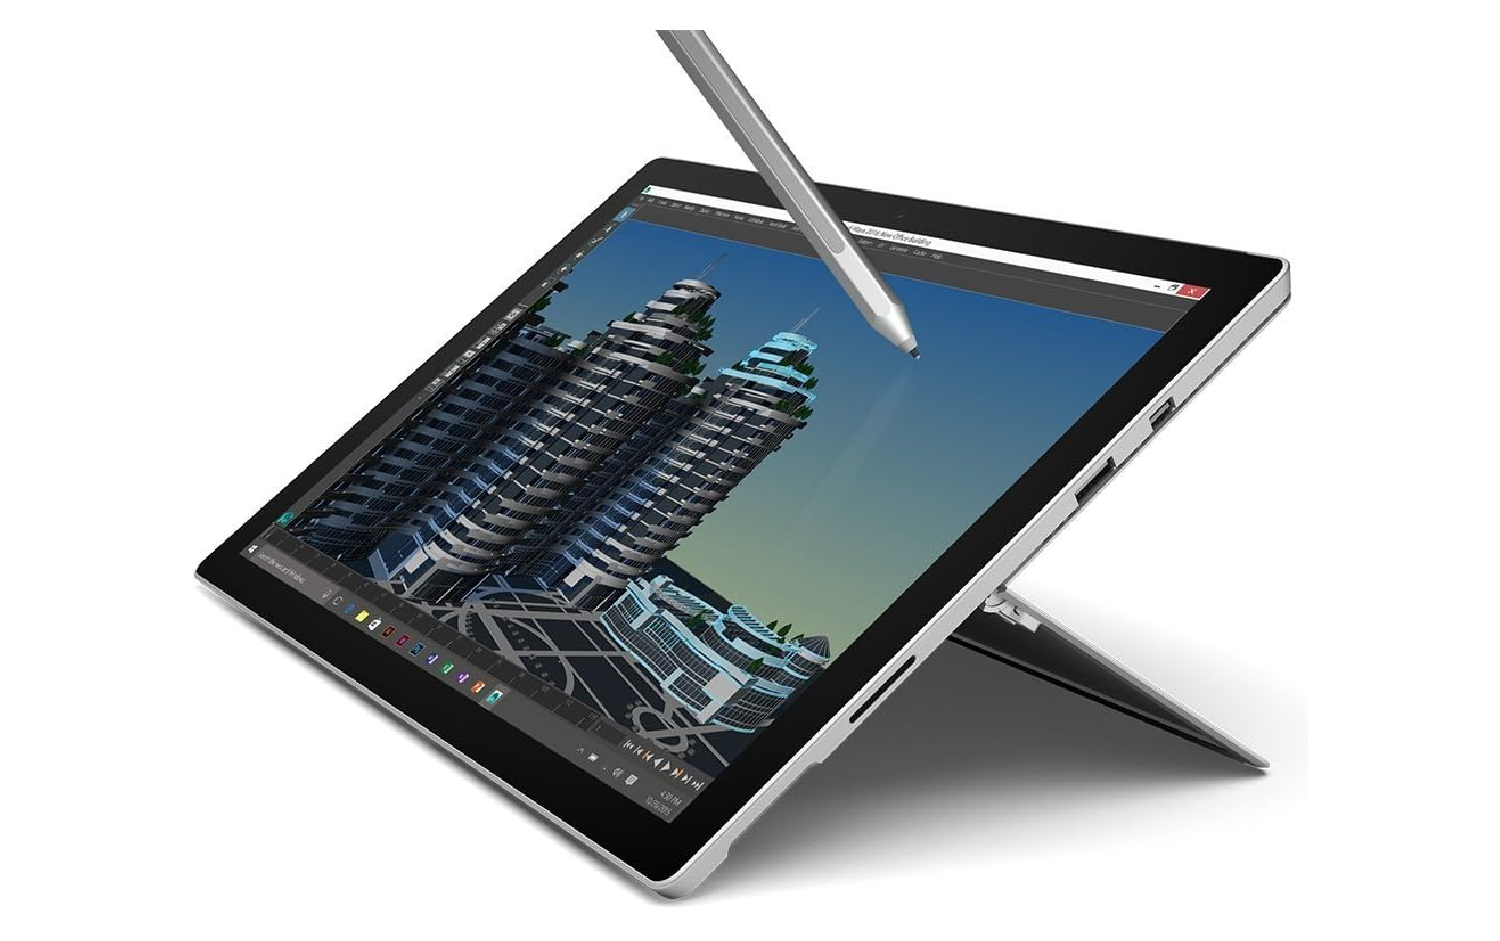 Microsoft Surface Pro 4 Intel Core i5 6th Gen 8GB RAM 256GB SSD Windows 10 Enterprise N Touchscreen